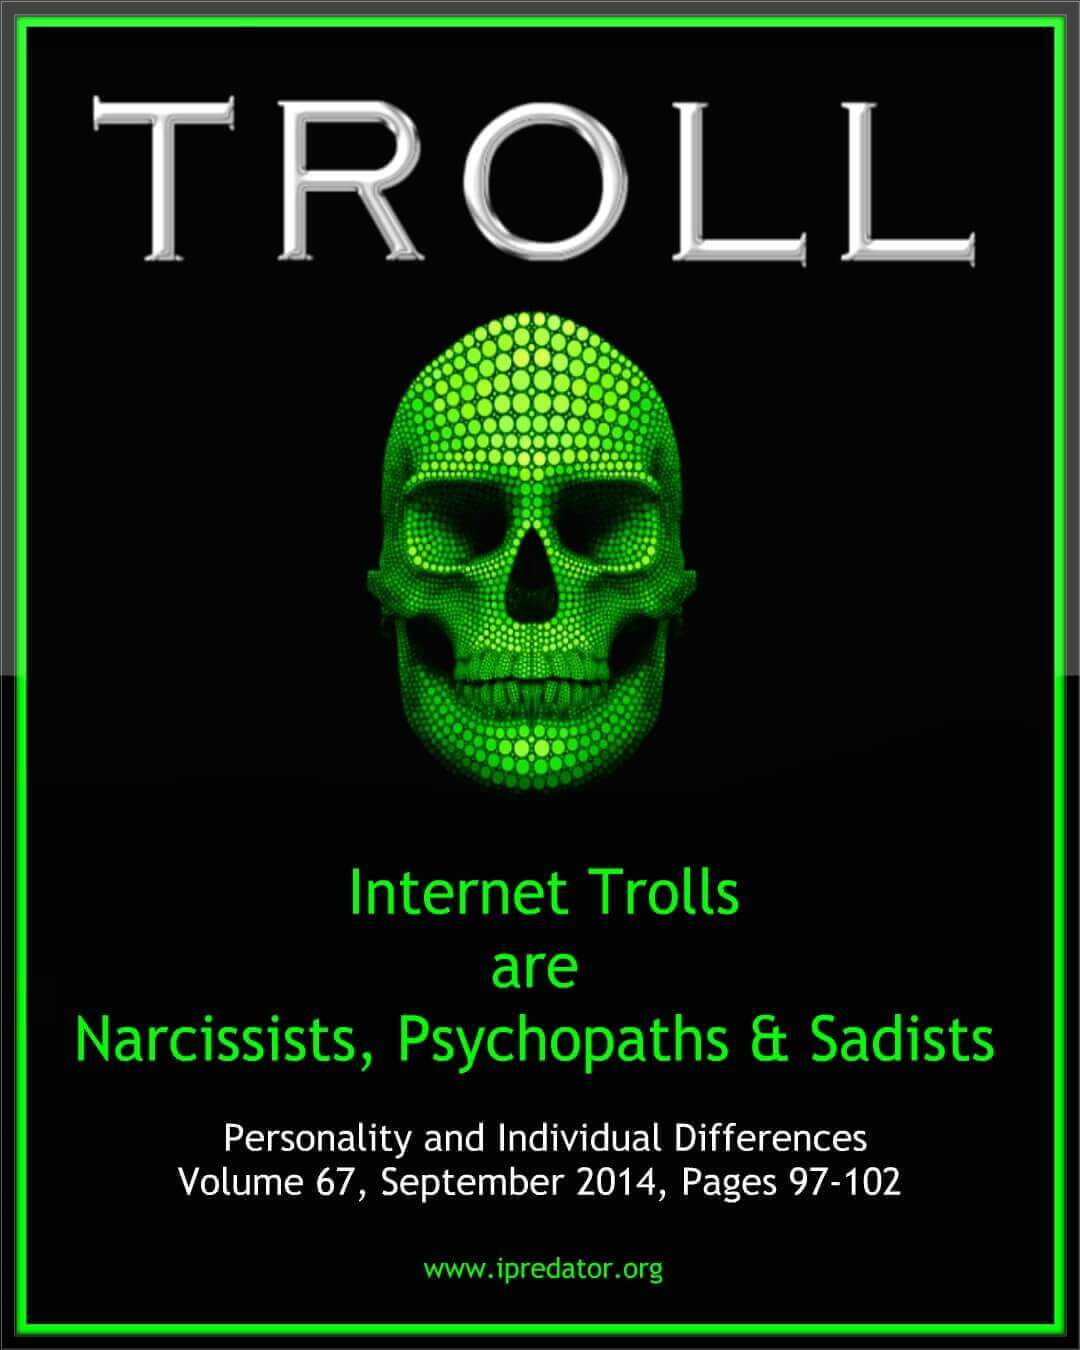  michael-nuccitelli-internet-troll-image-16